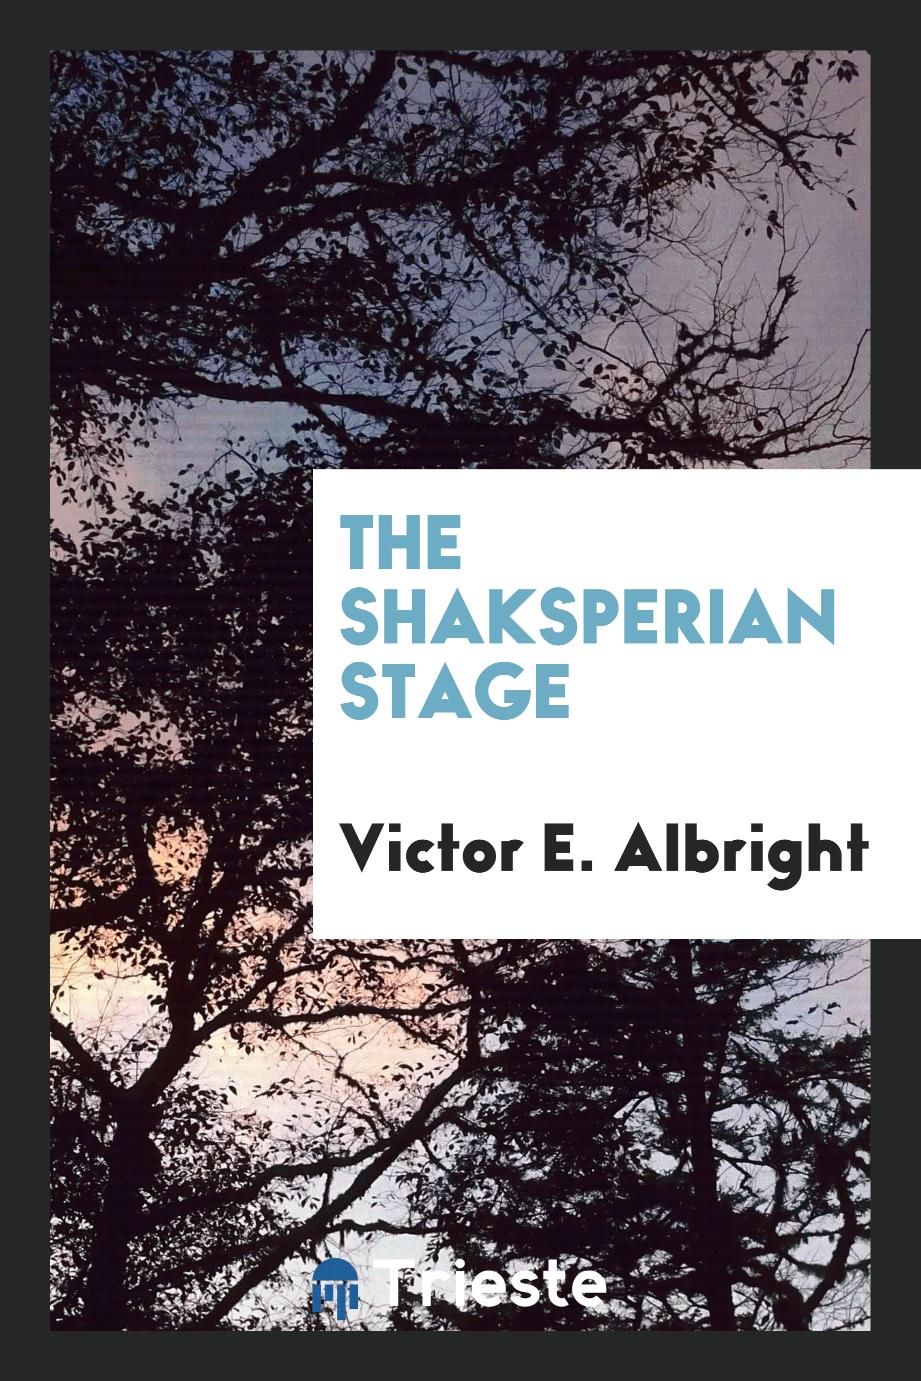 The Shaksperian stage